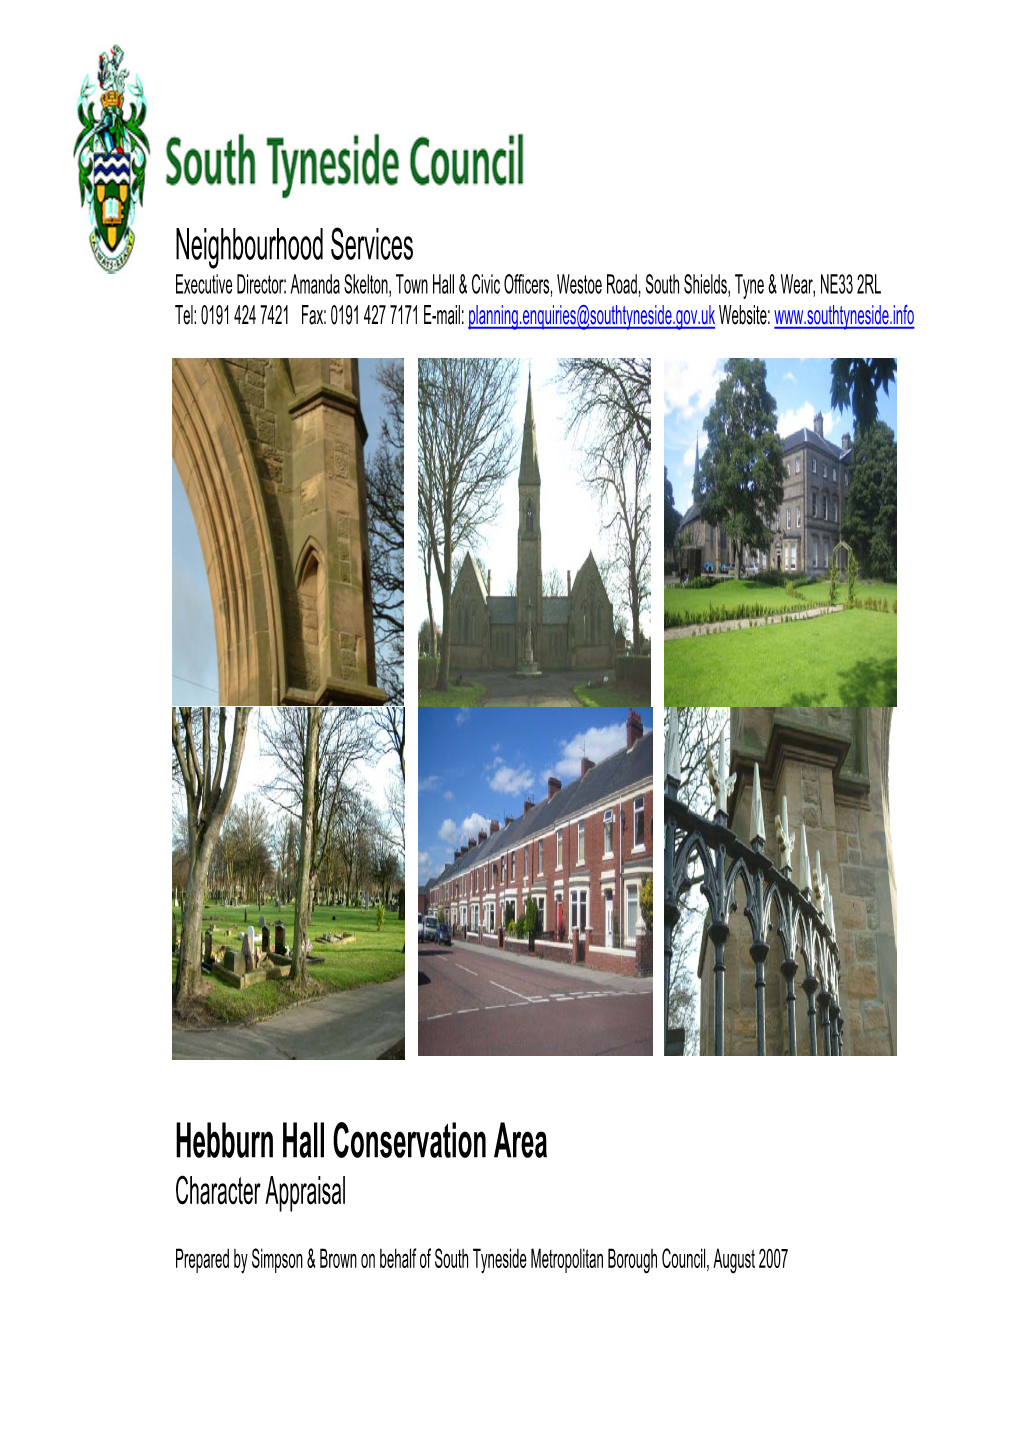 Hebburn Hall Conservation Area Character Appraisal (August 2007)